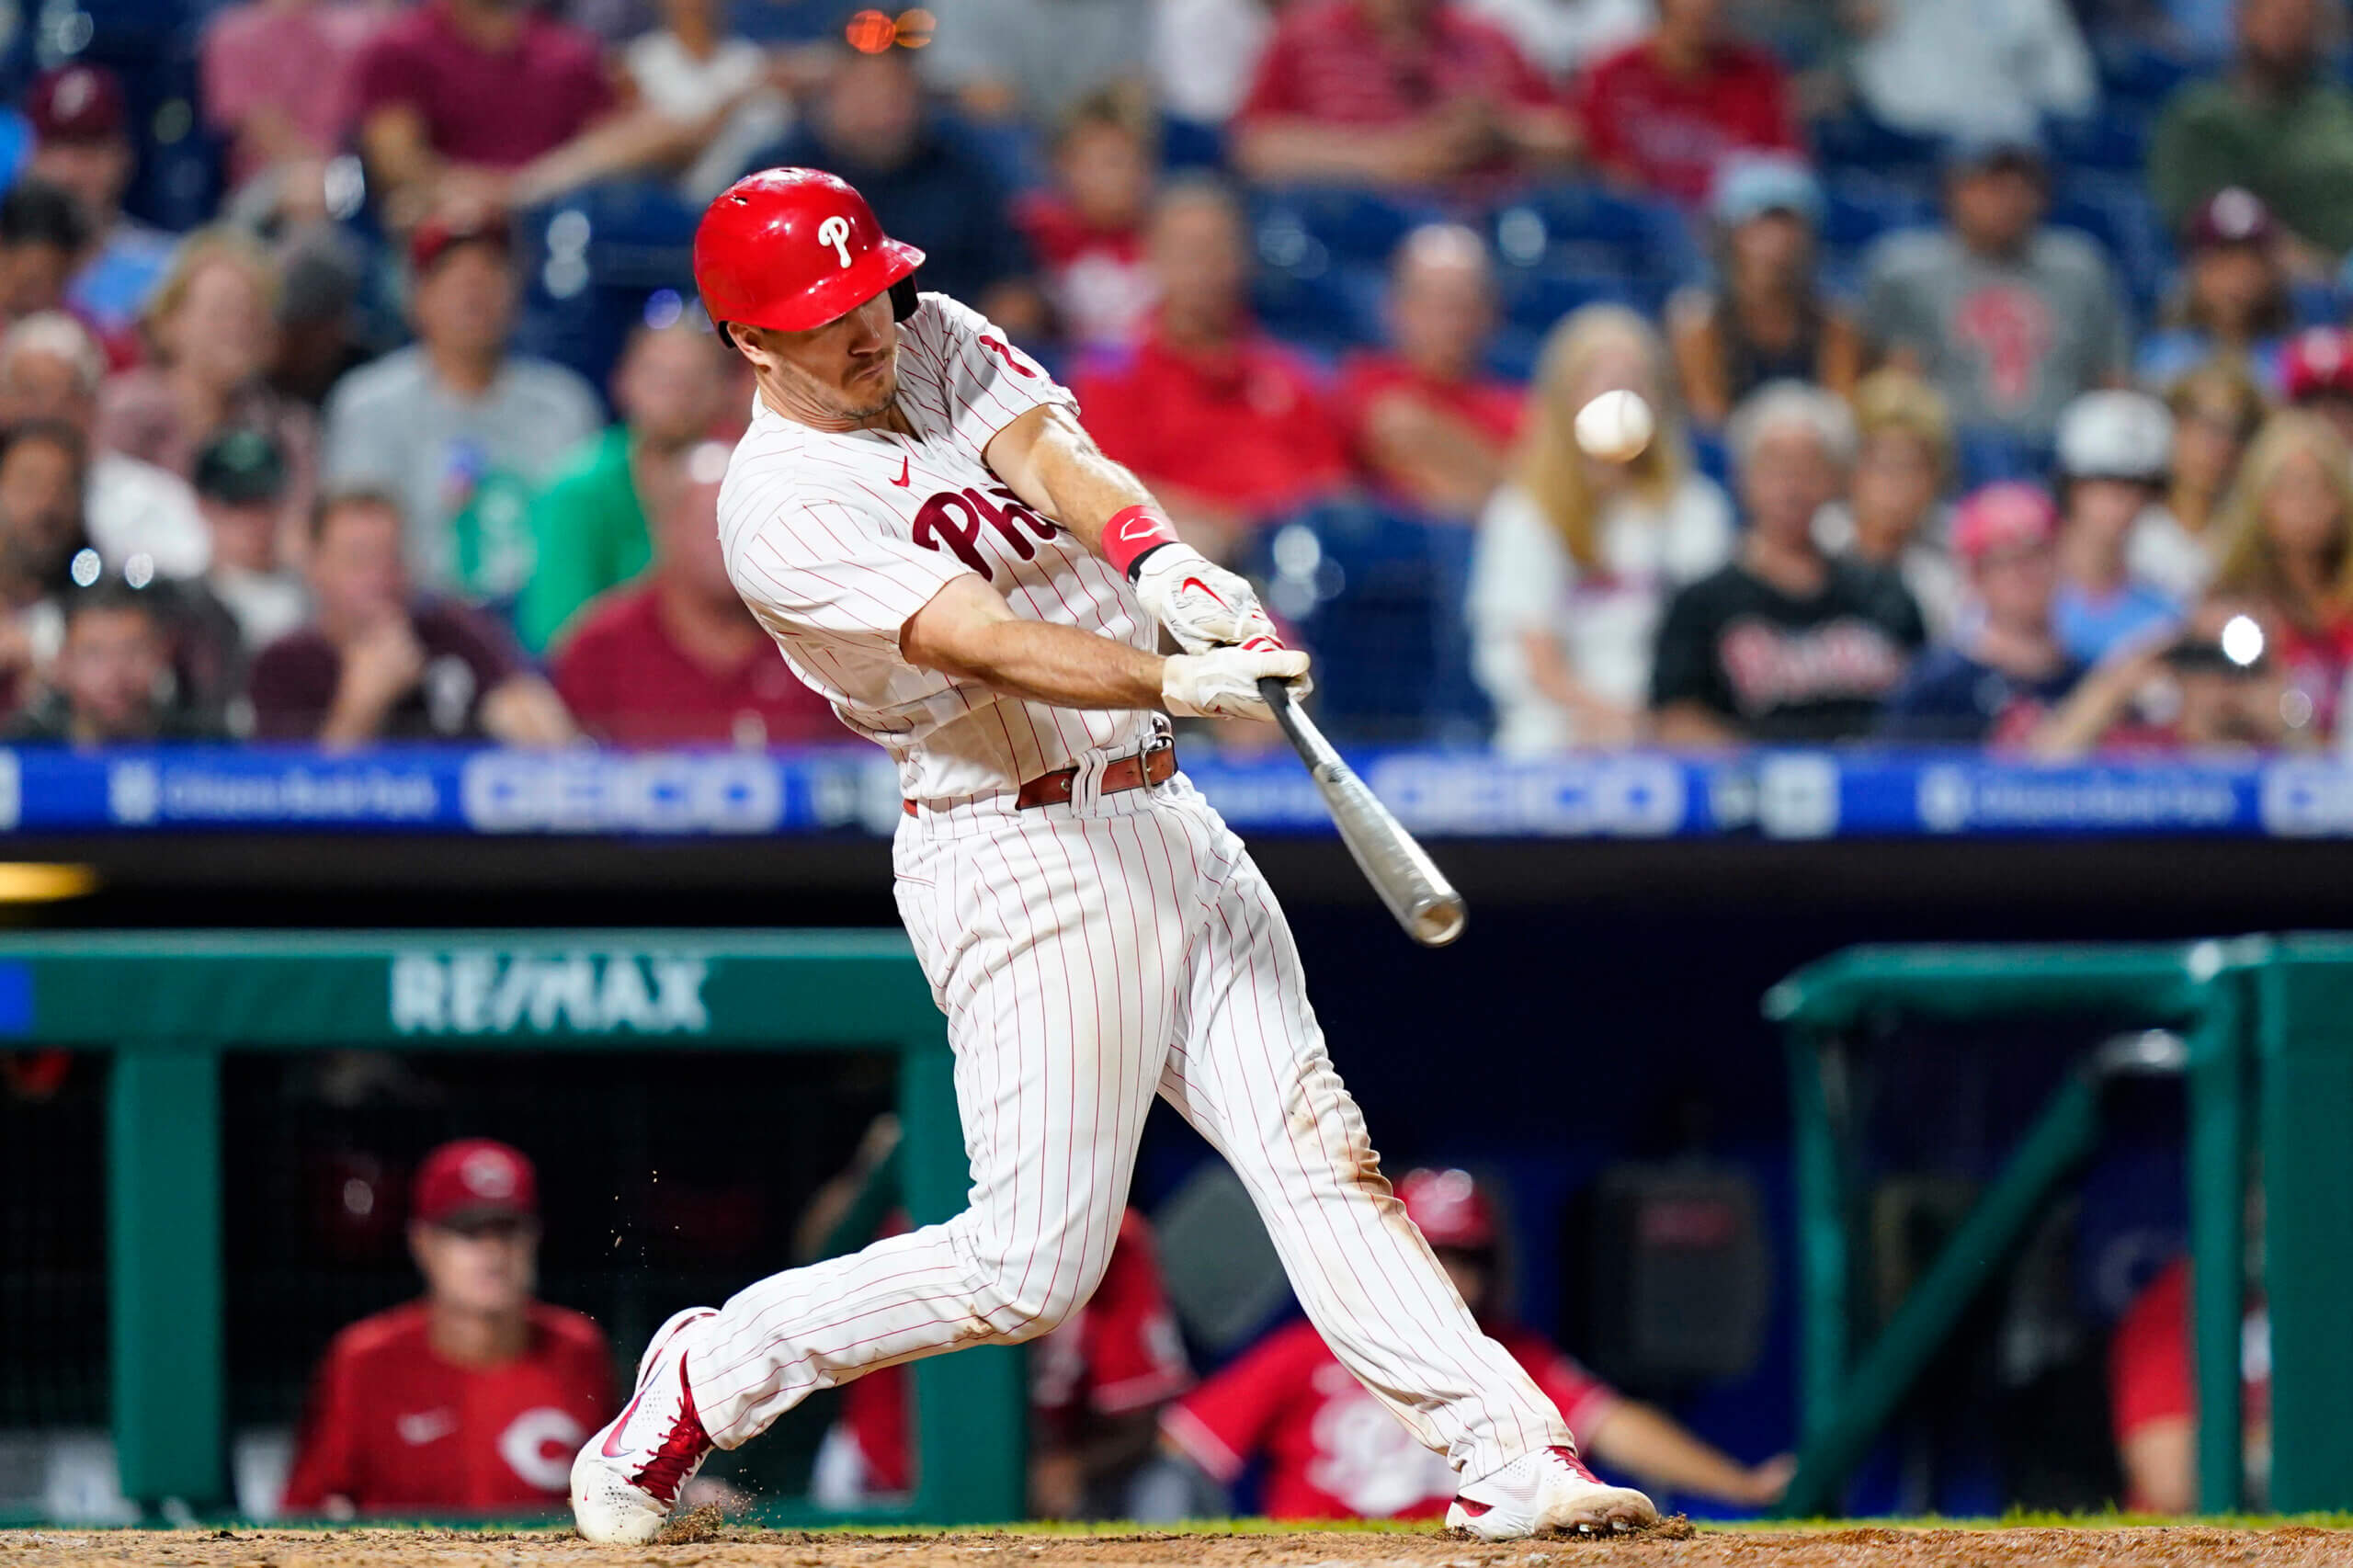 Phillies 2019 season preview: Catcher J.T. Realmuto